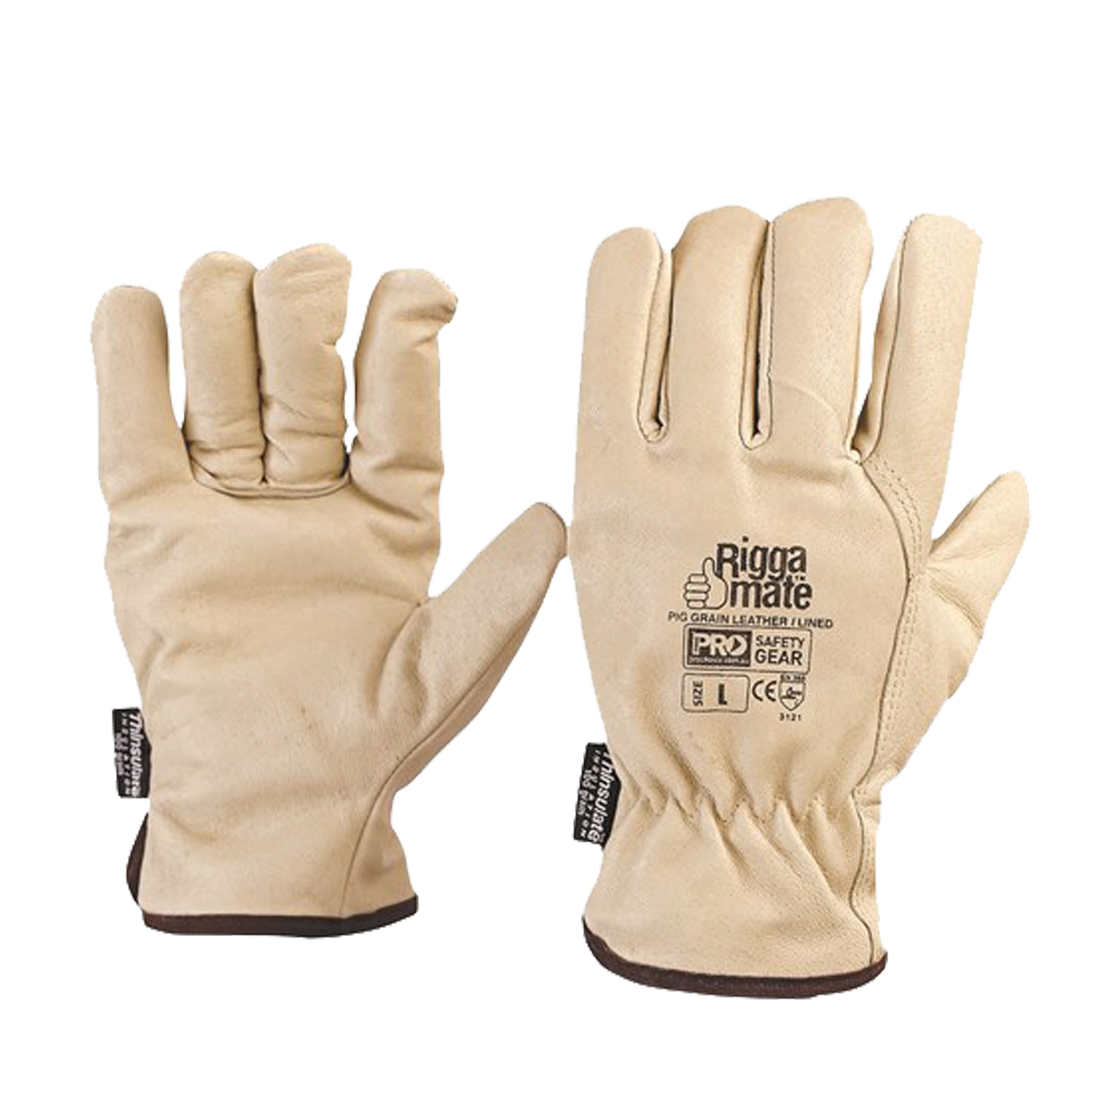 Pro Choice Riggamate Thermal Glove 12PK PGL41TL